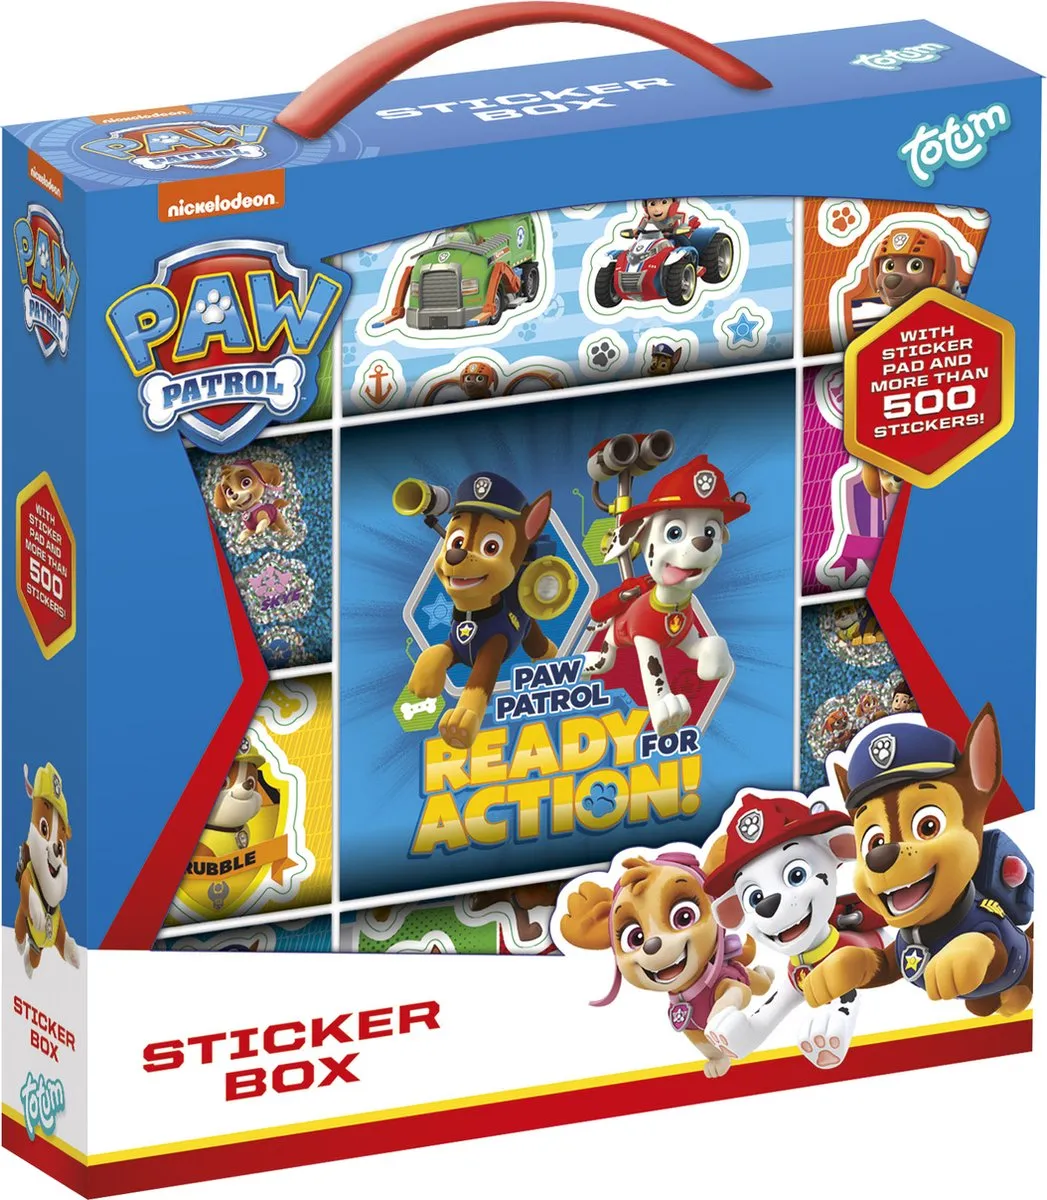 Totum - PAW Patrol - Stickerbox 500+ met 12 rollen stickers inclusief plak- en tekenboekje speelgoed